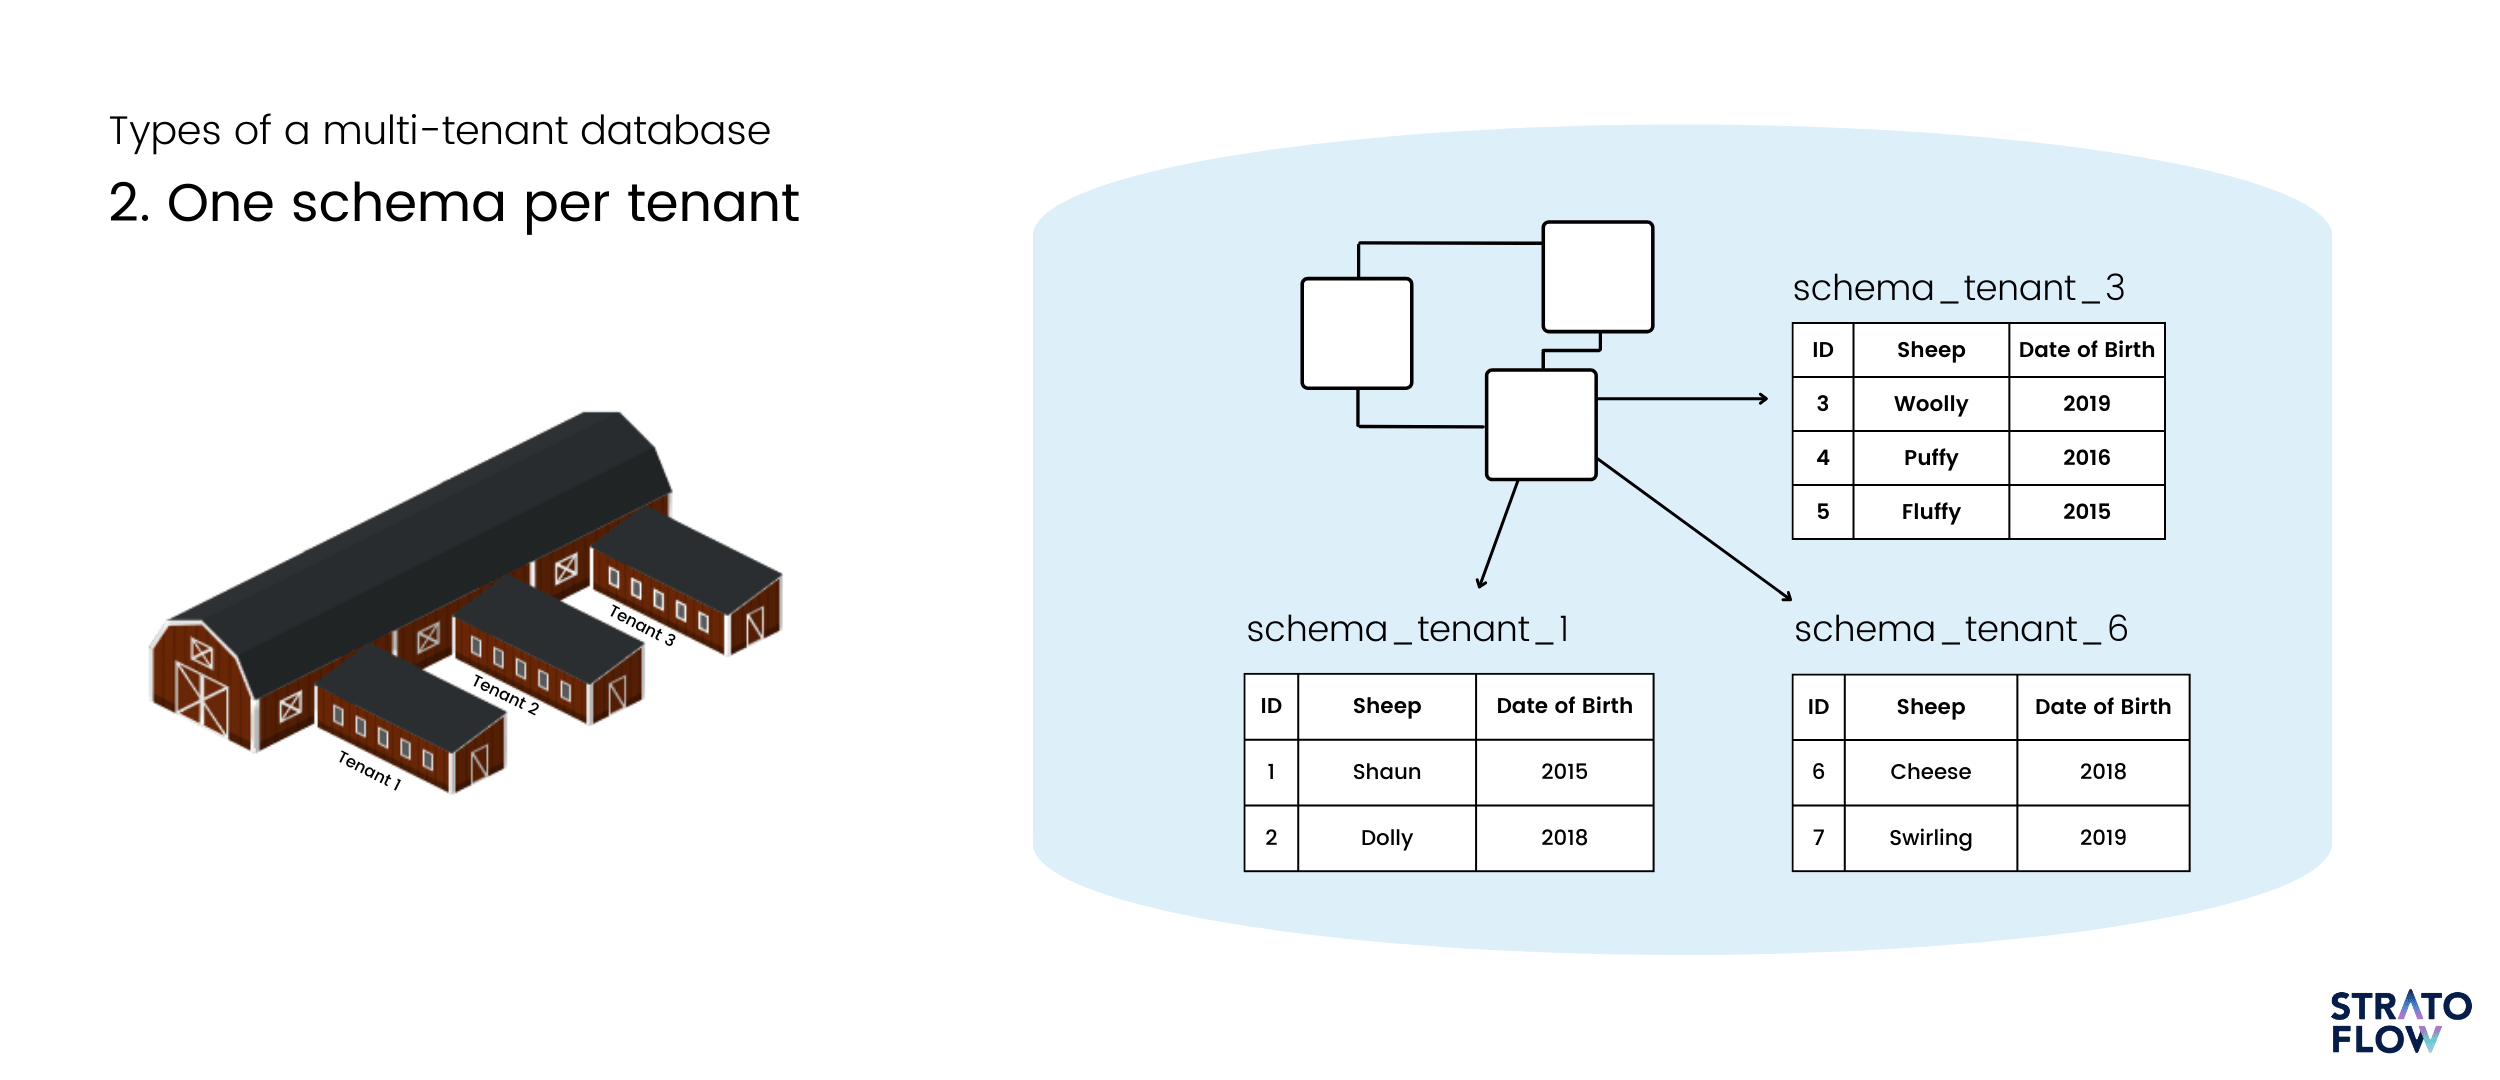 One schema per tenant type of multitenancy databases